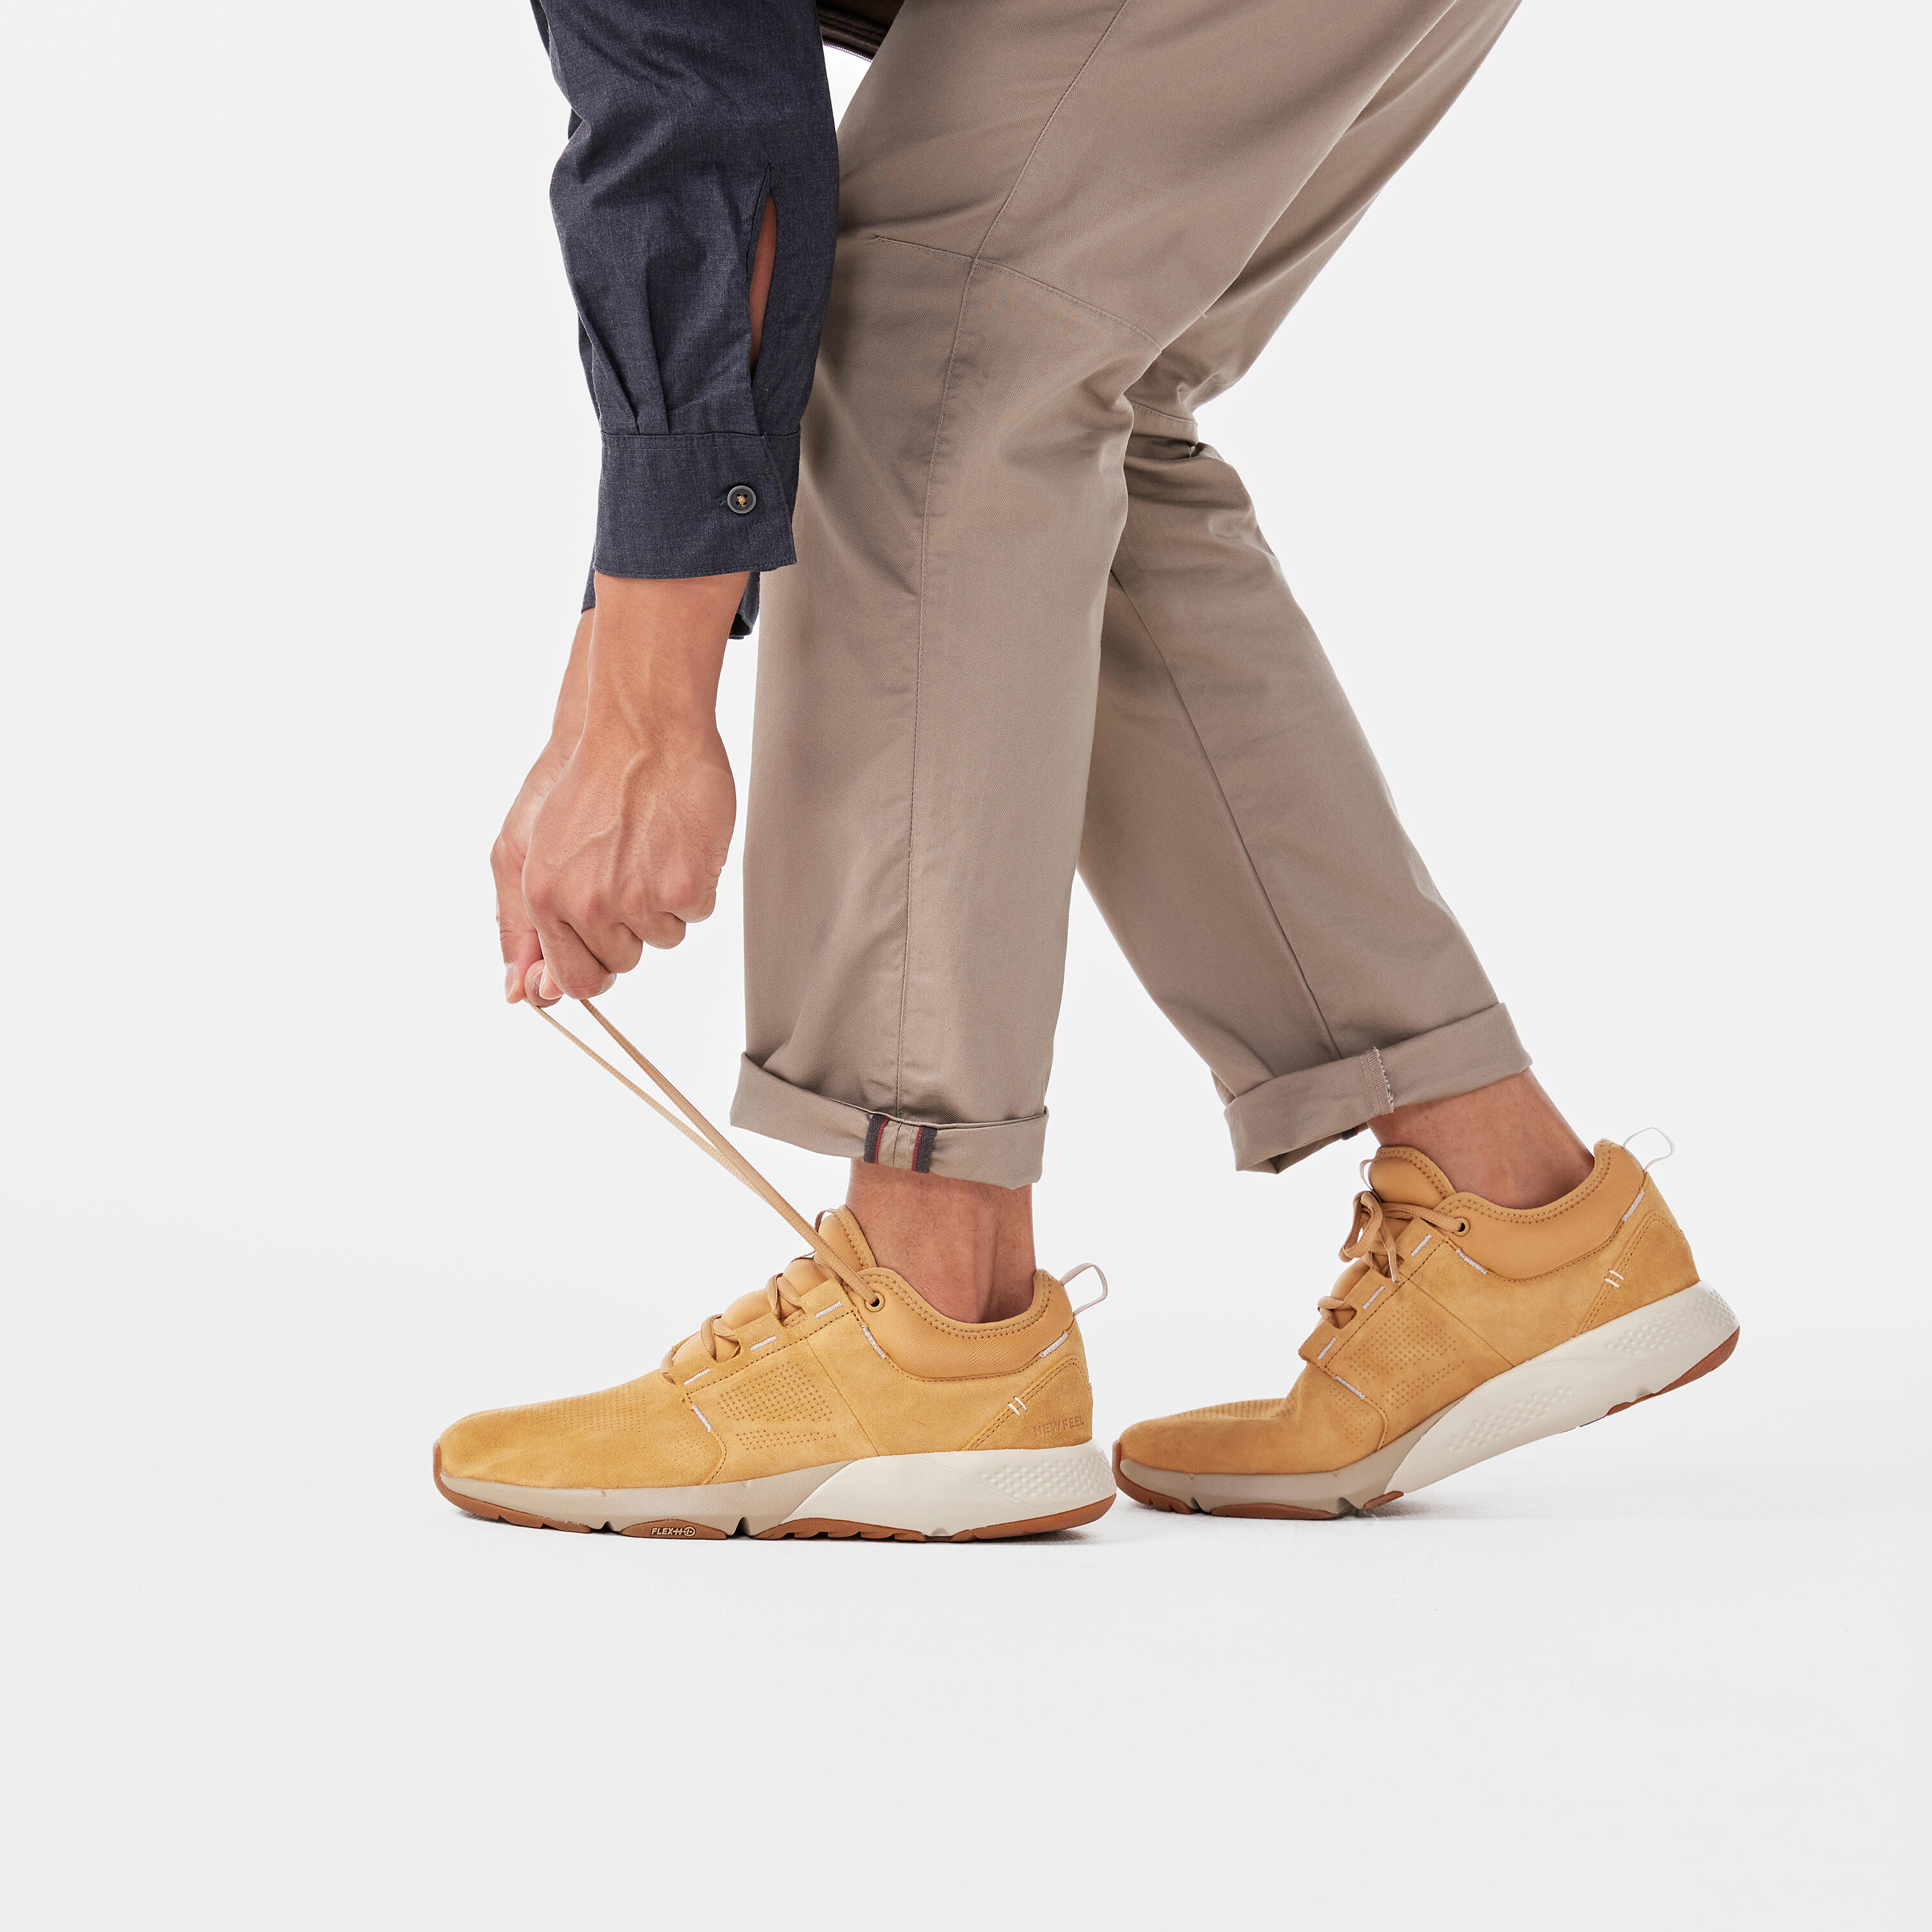 Actiwalk Comfort Leather Men's Urban Walking Shoes - Camel 20/43